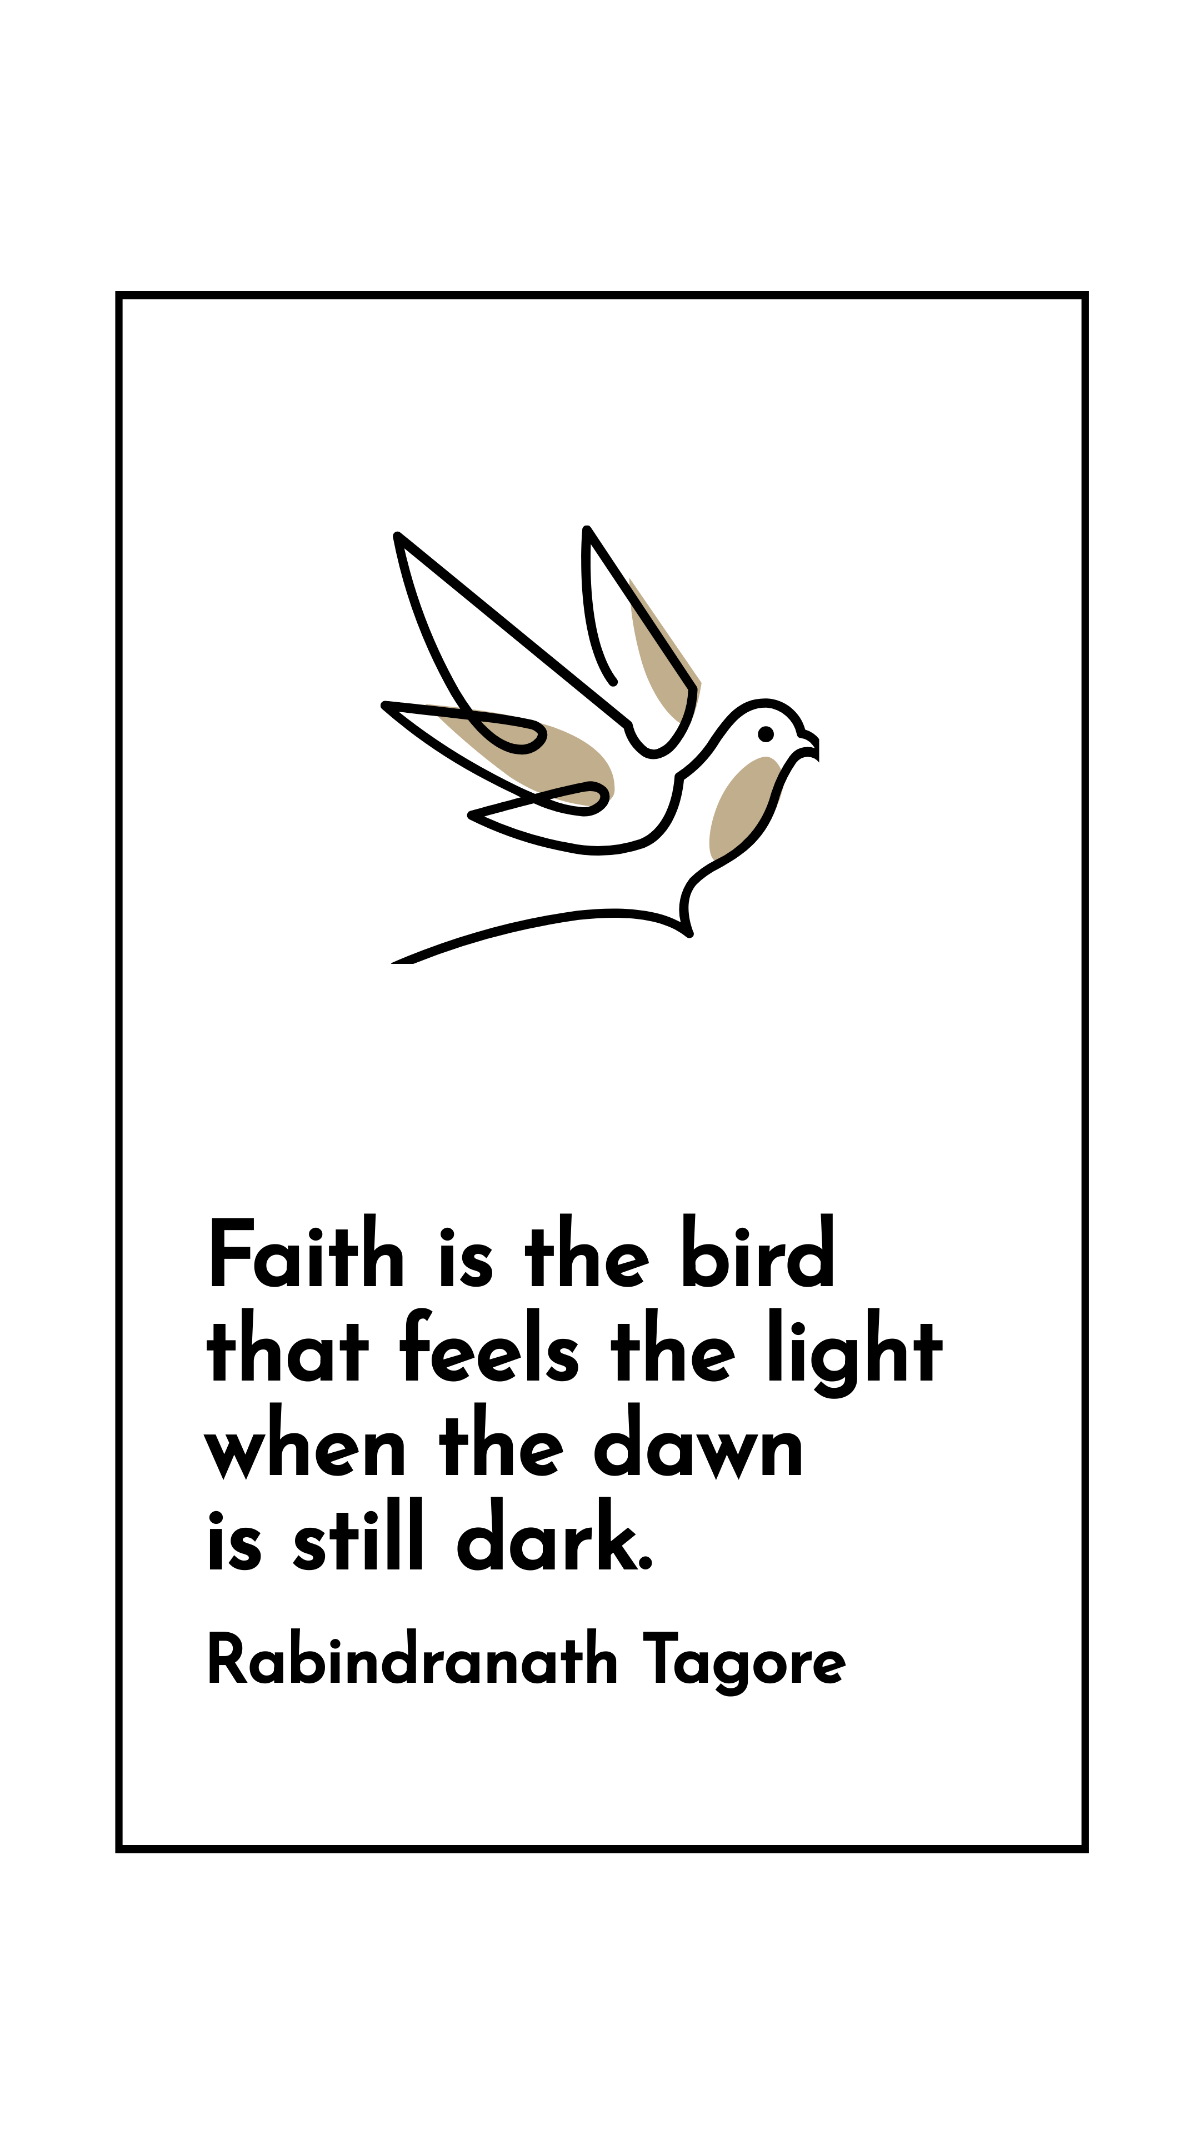 Rabindranath Tagore - Faith is the bird that feels the light when the dawn is still dark. Template